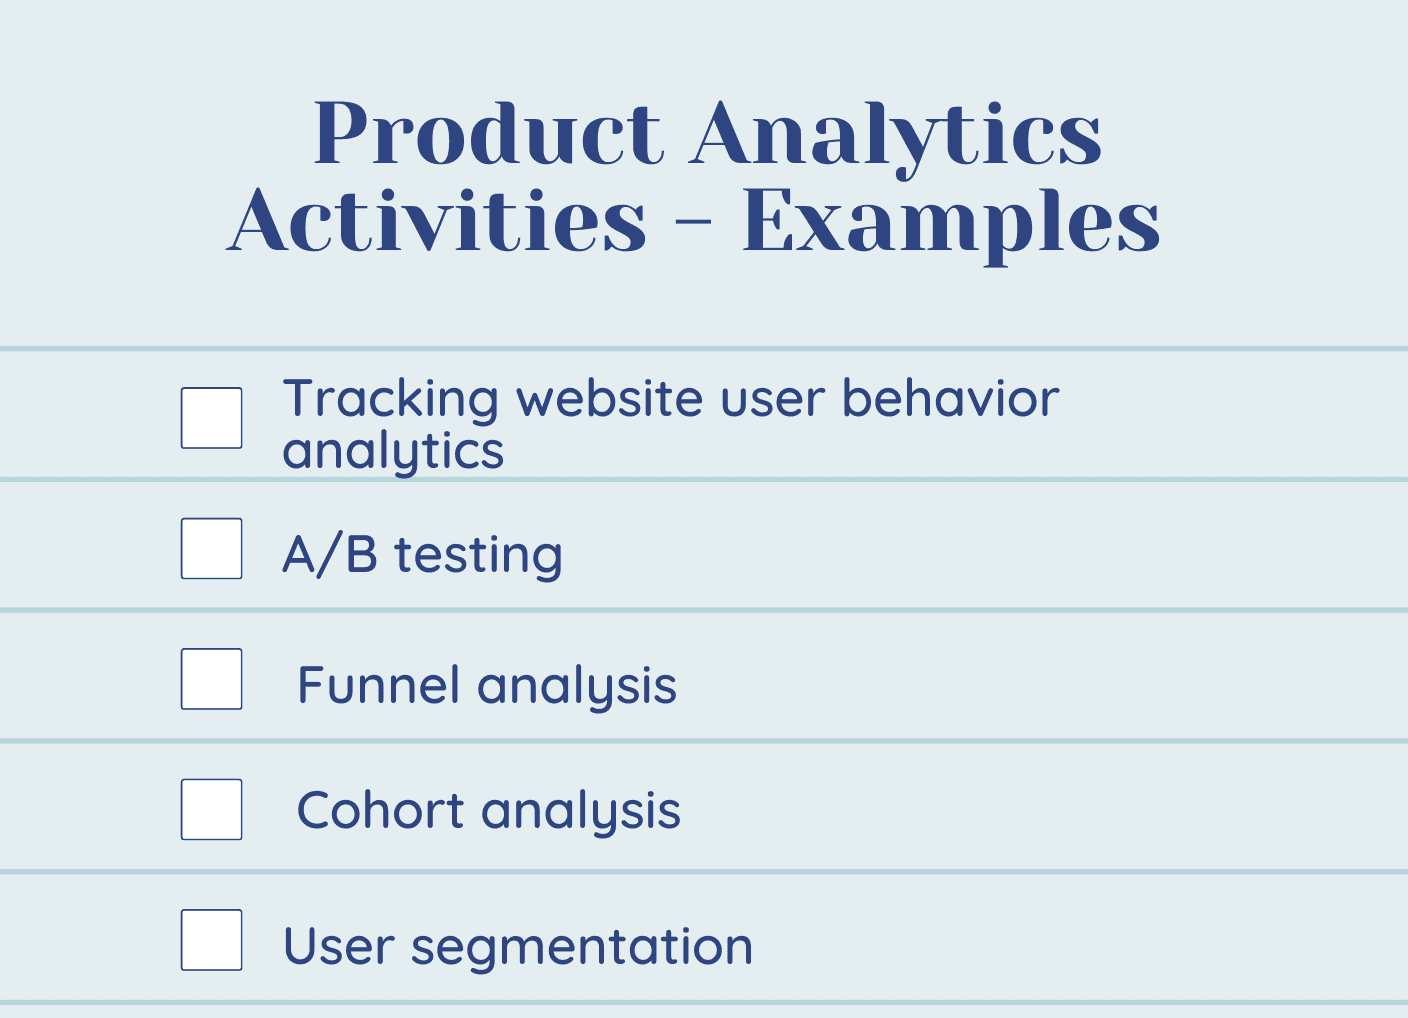 Product Analytics Examples